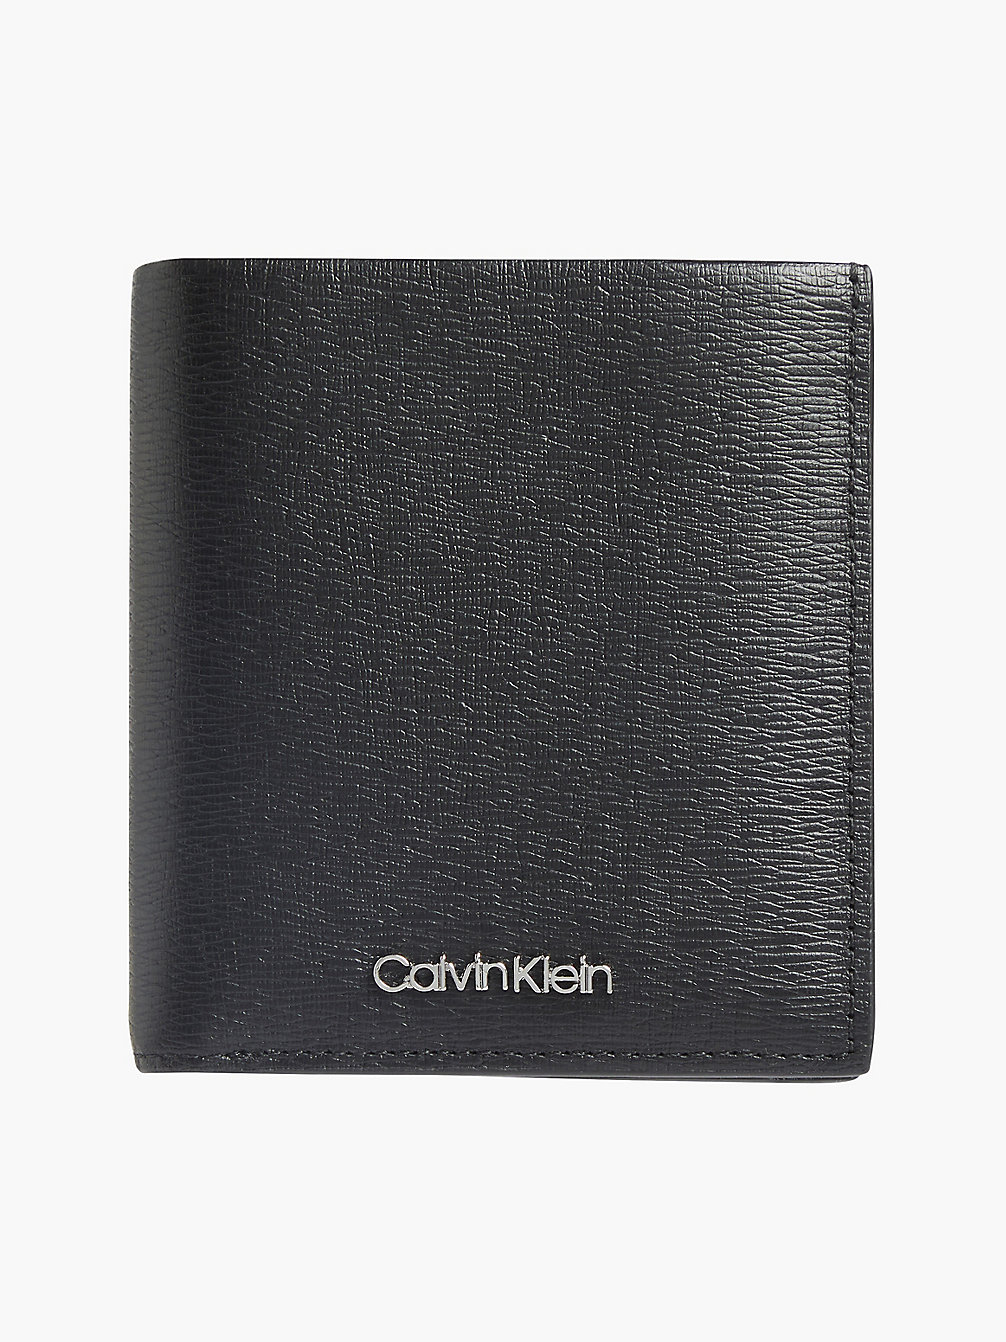 CK BLACK Leather Trifold Wallet undefined men Calvin Klein